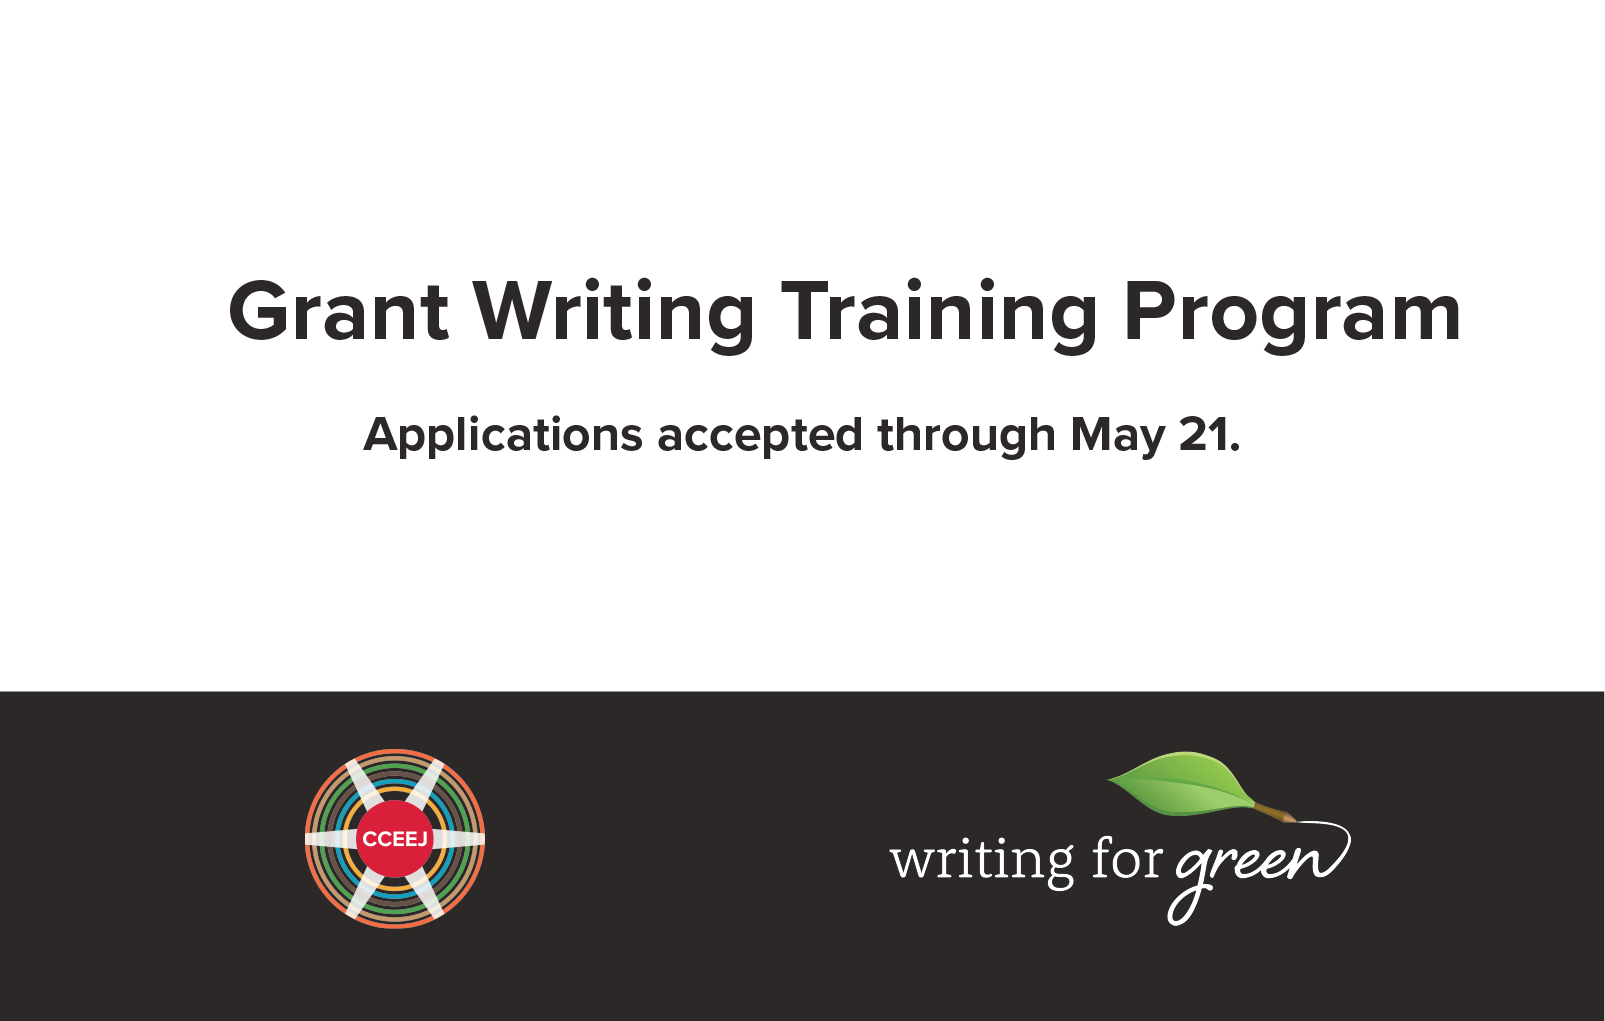 CCEEJ Grant Writing Training Program